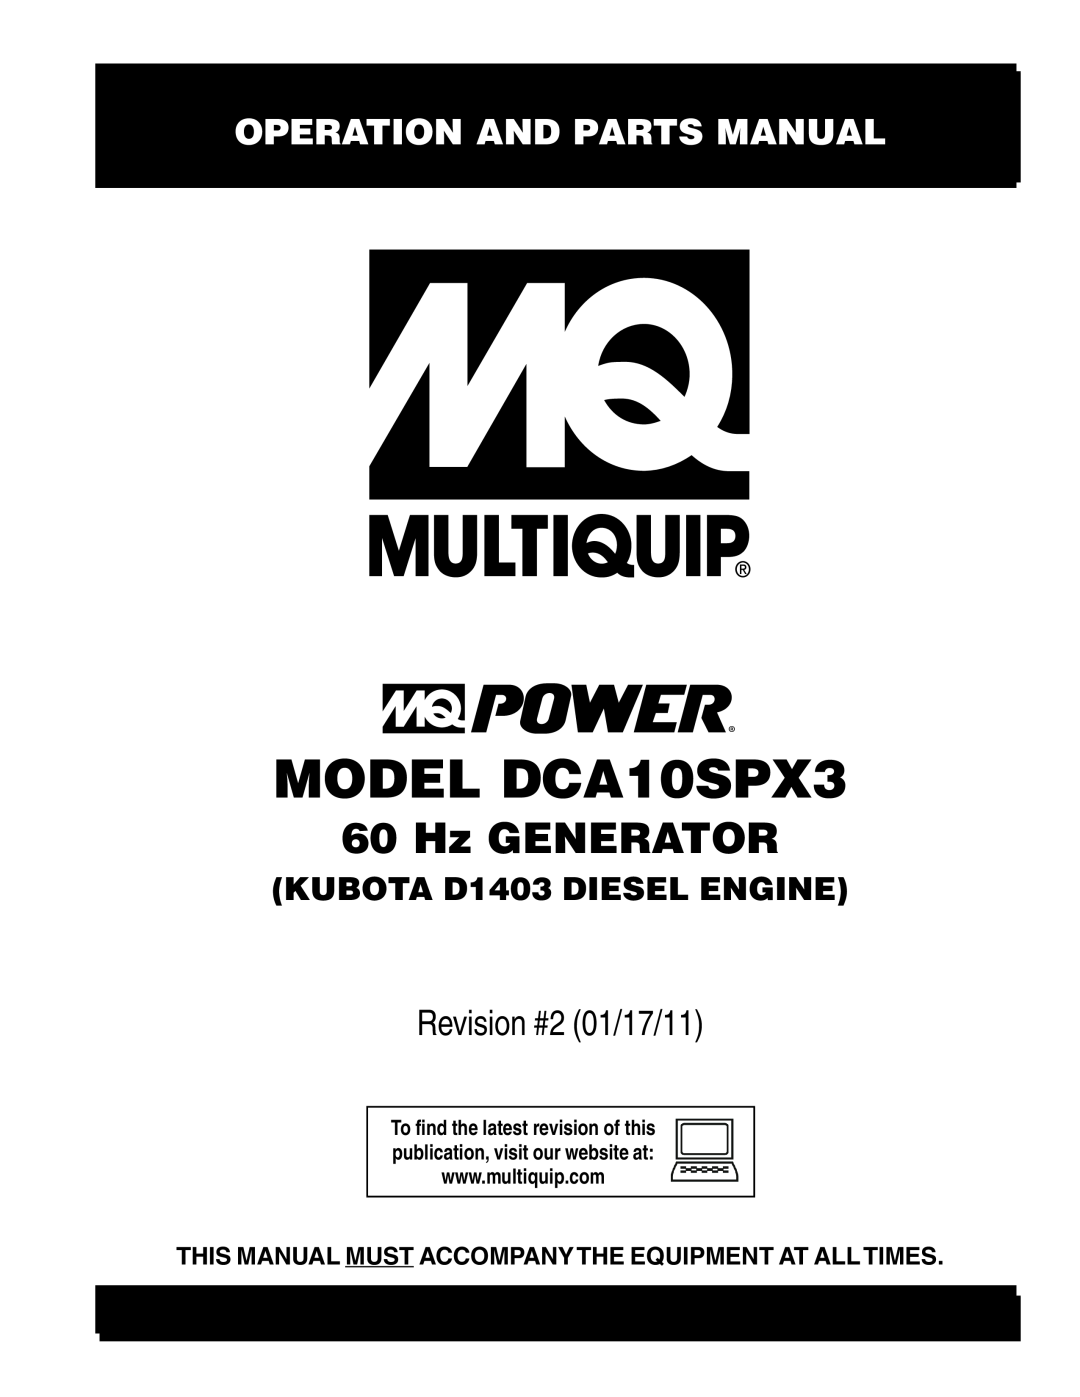 Multiquip manual MODEL DCA10SPX3, KUBOTA D1403 DIESEL ENGINE, Hz GENERATOR, Operation And Parts Manual 